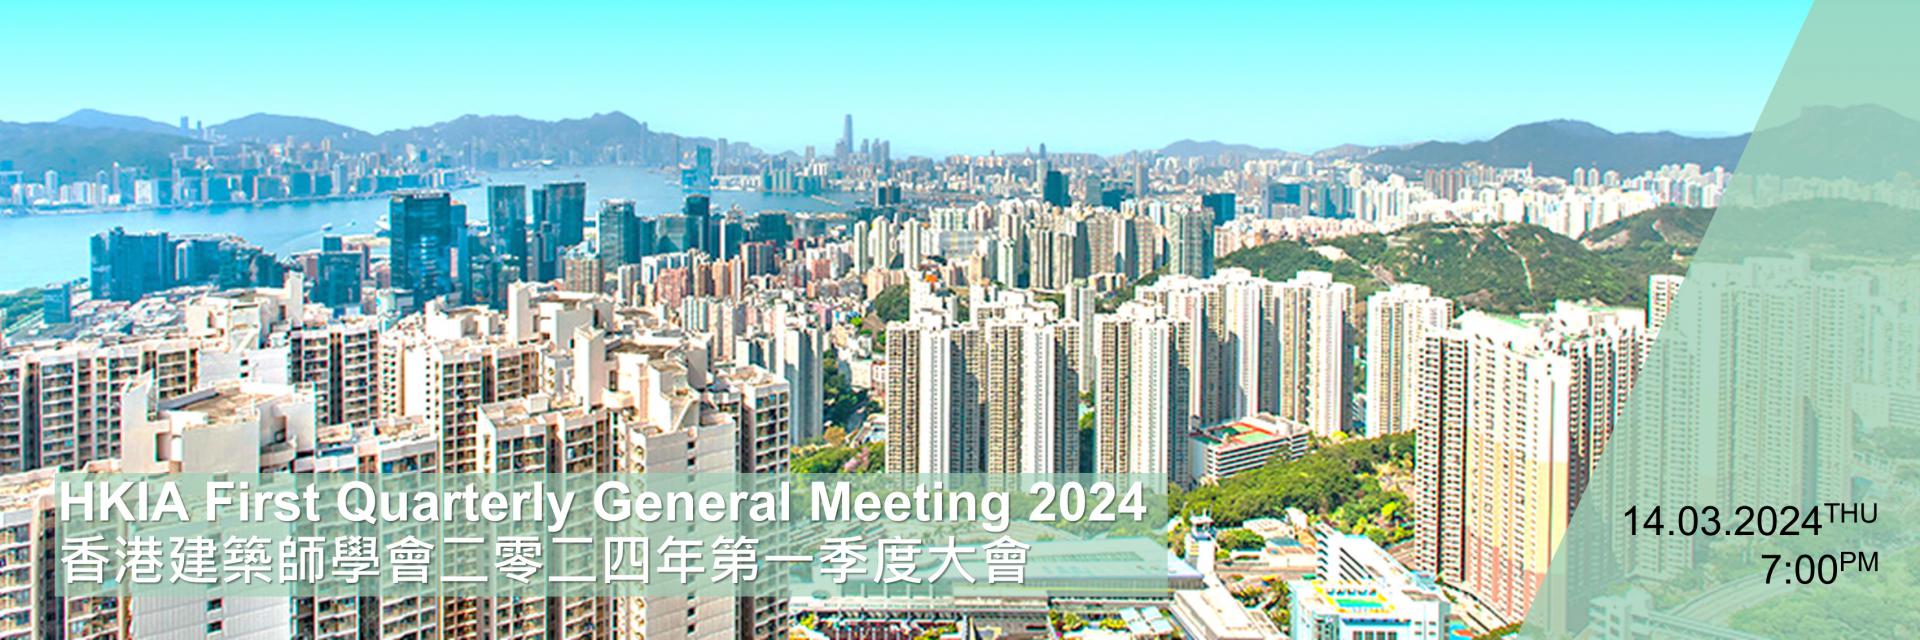 HKIA First Quarterly General Meeting (1st QGM) 2024